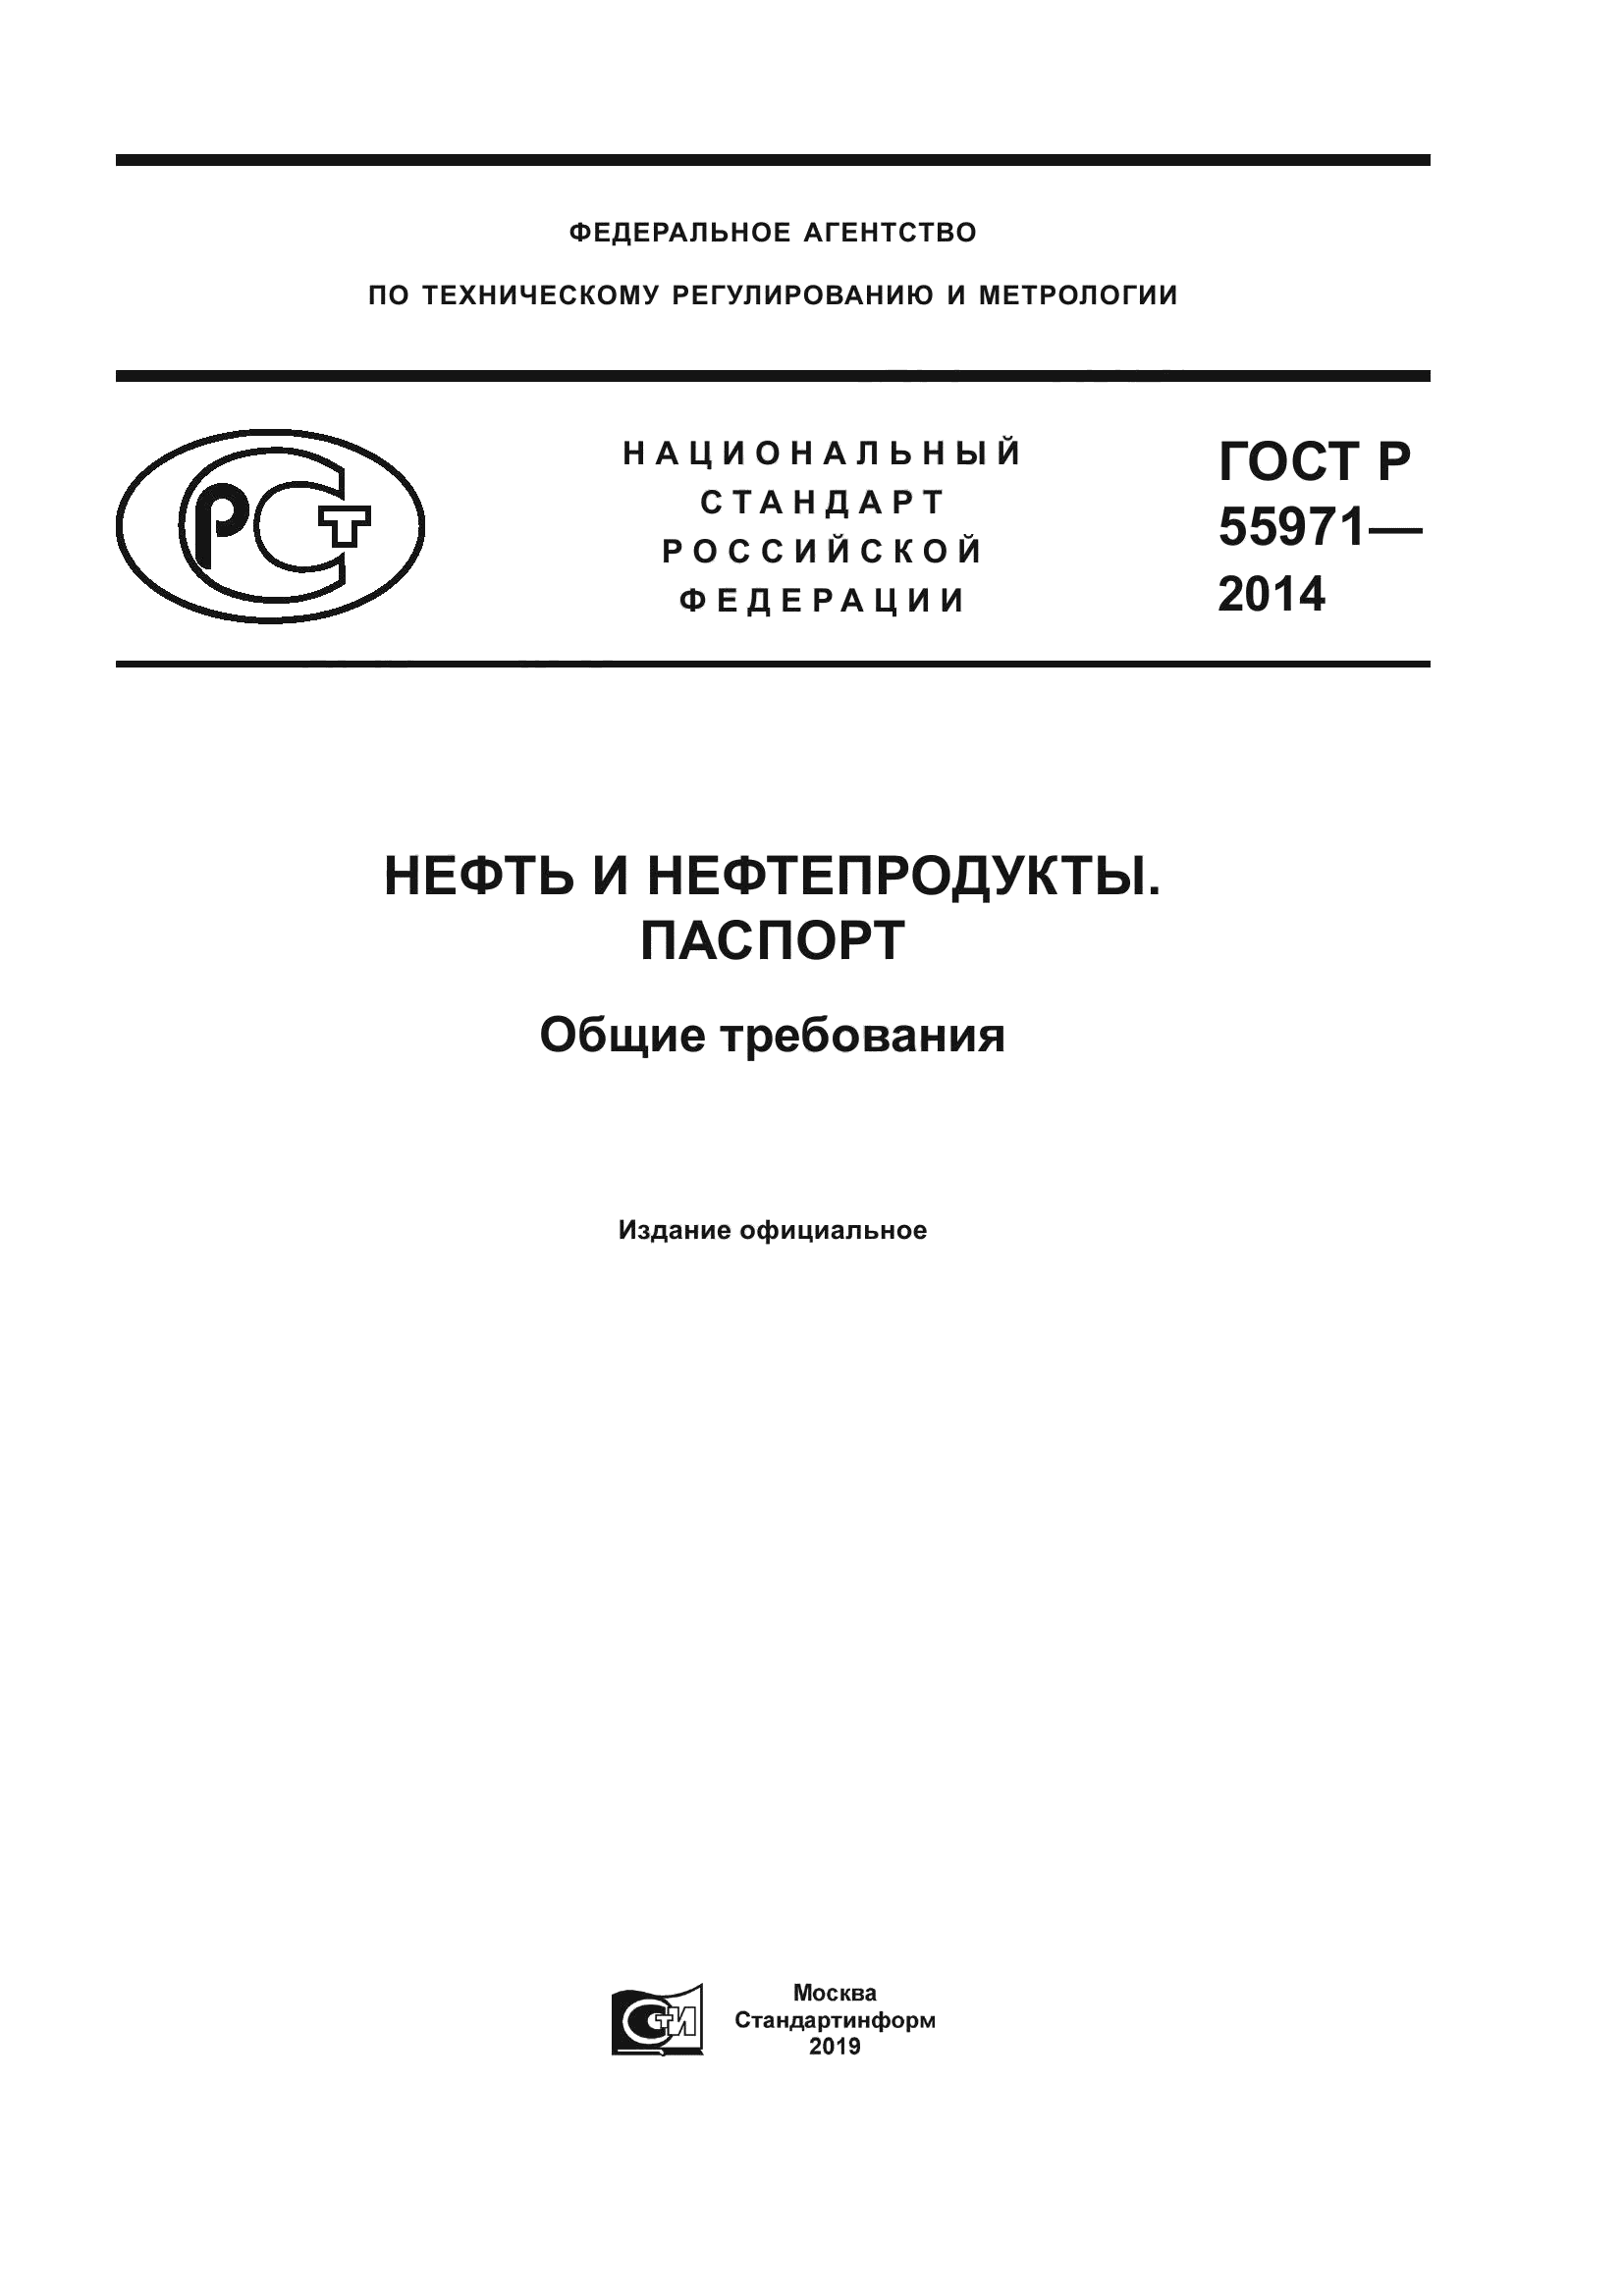 ГОСТ Р 55971-2014